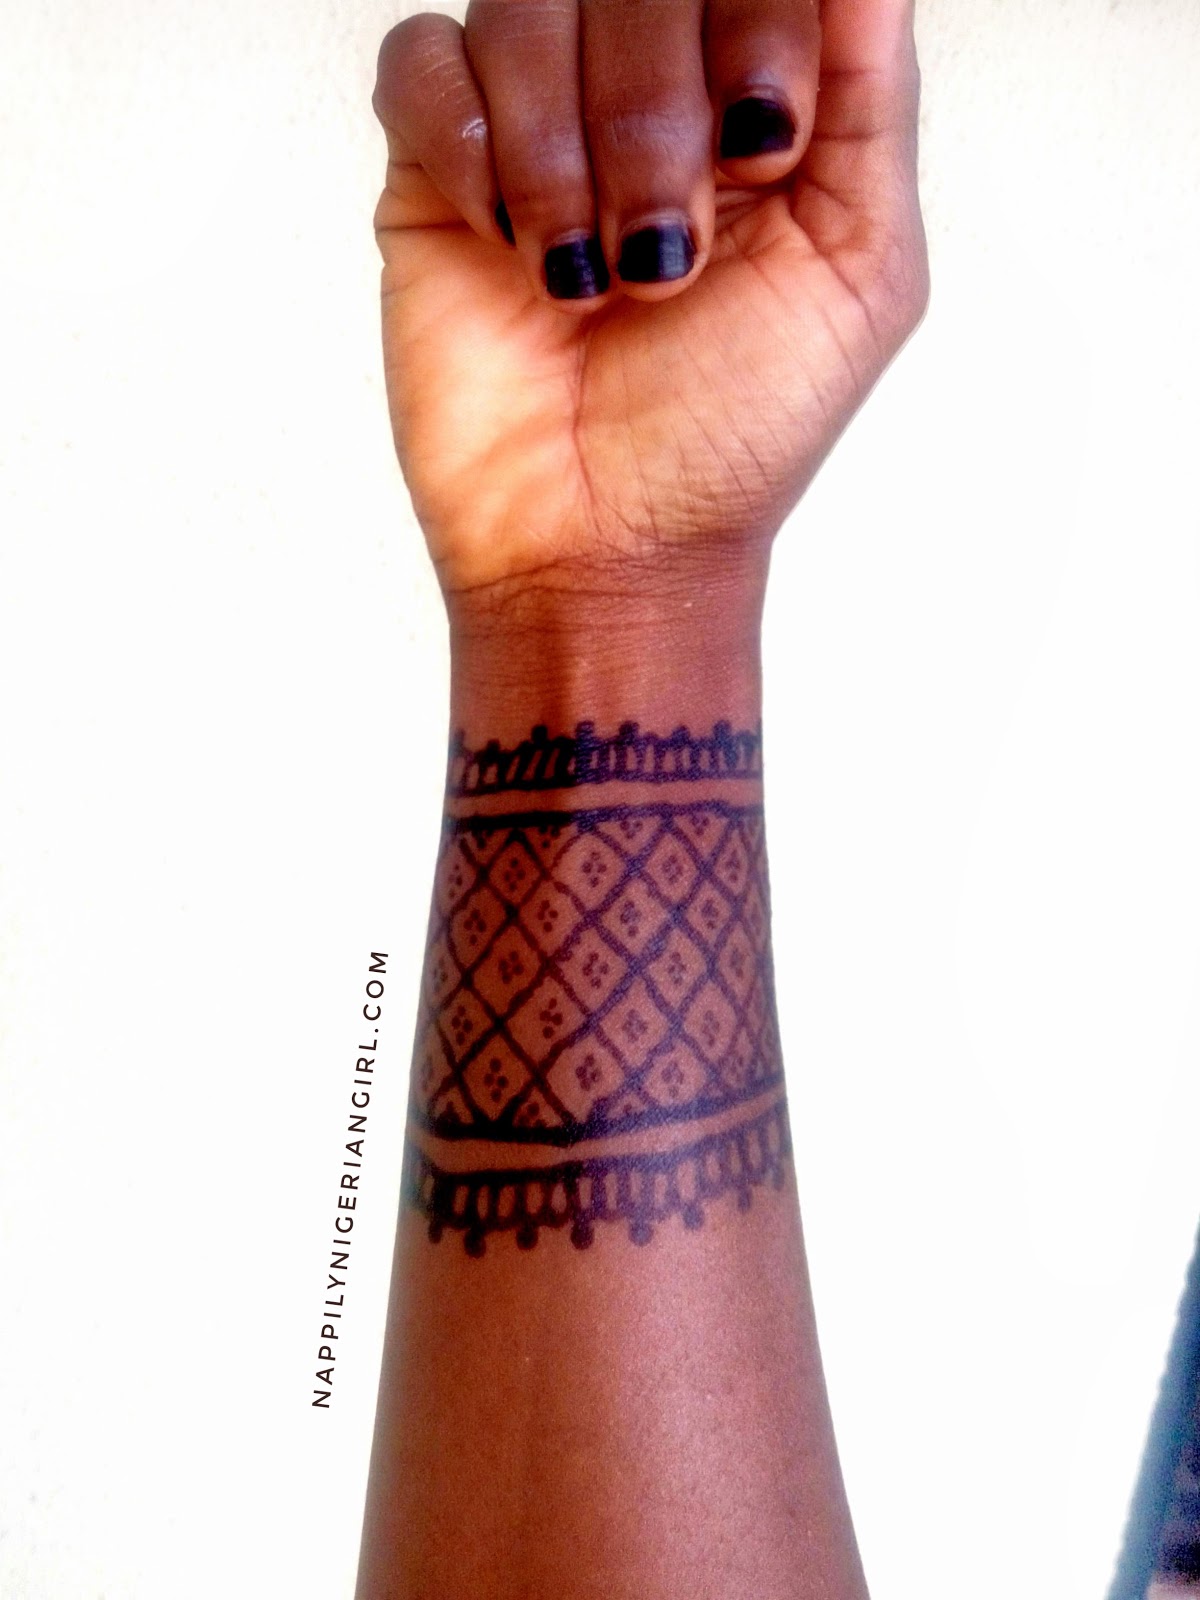 Nigerianinspired maui tattoo by  Made in Aarhus Tattoo  Facebook